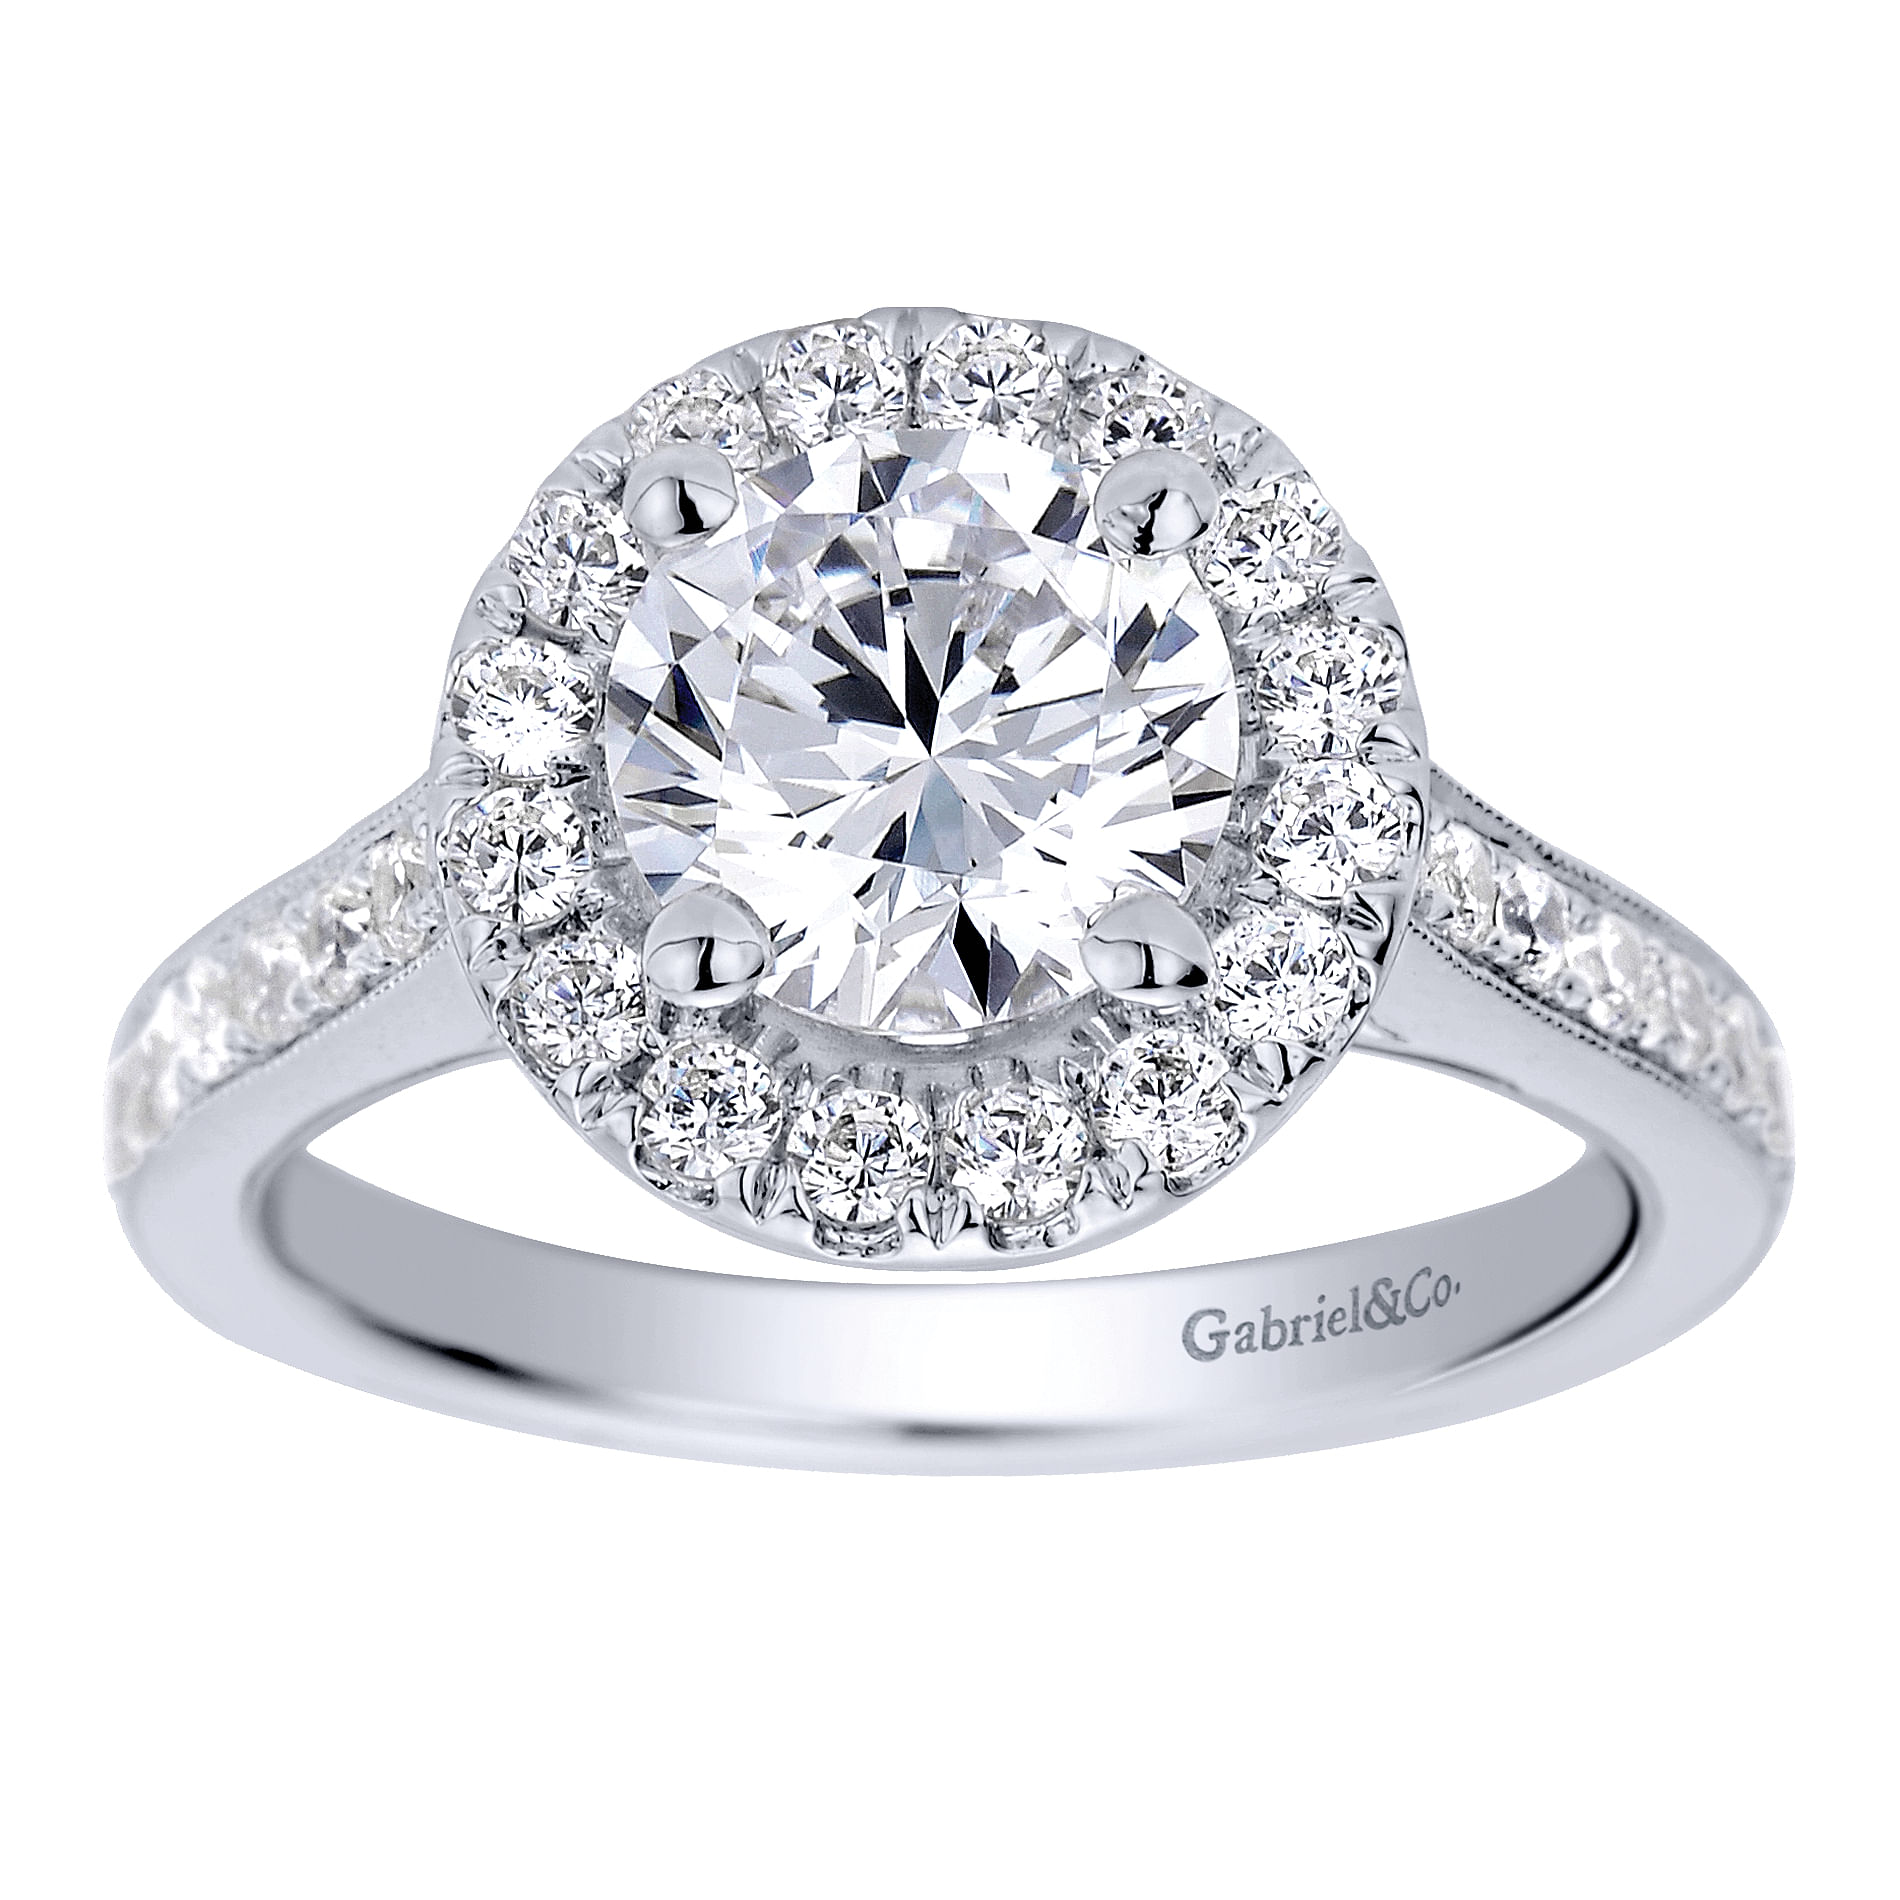 Vintage Inspired 14K White Gold Round Halo Diamond Engagement Ring